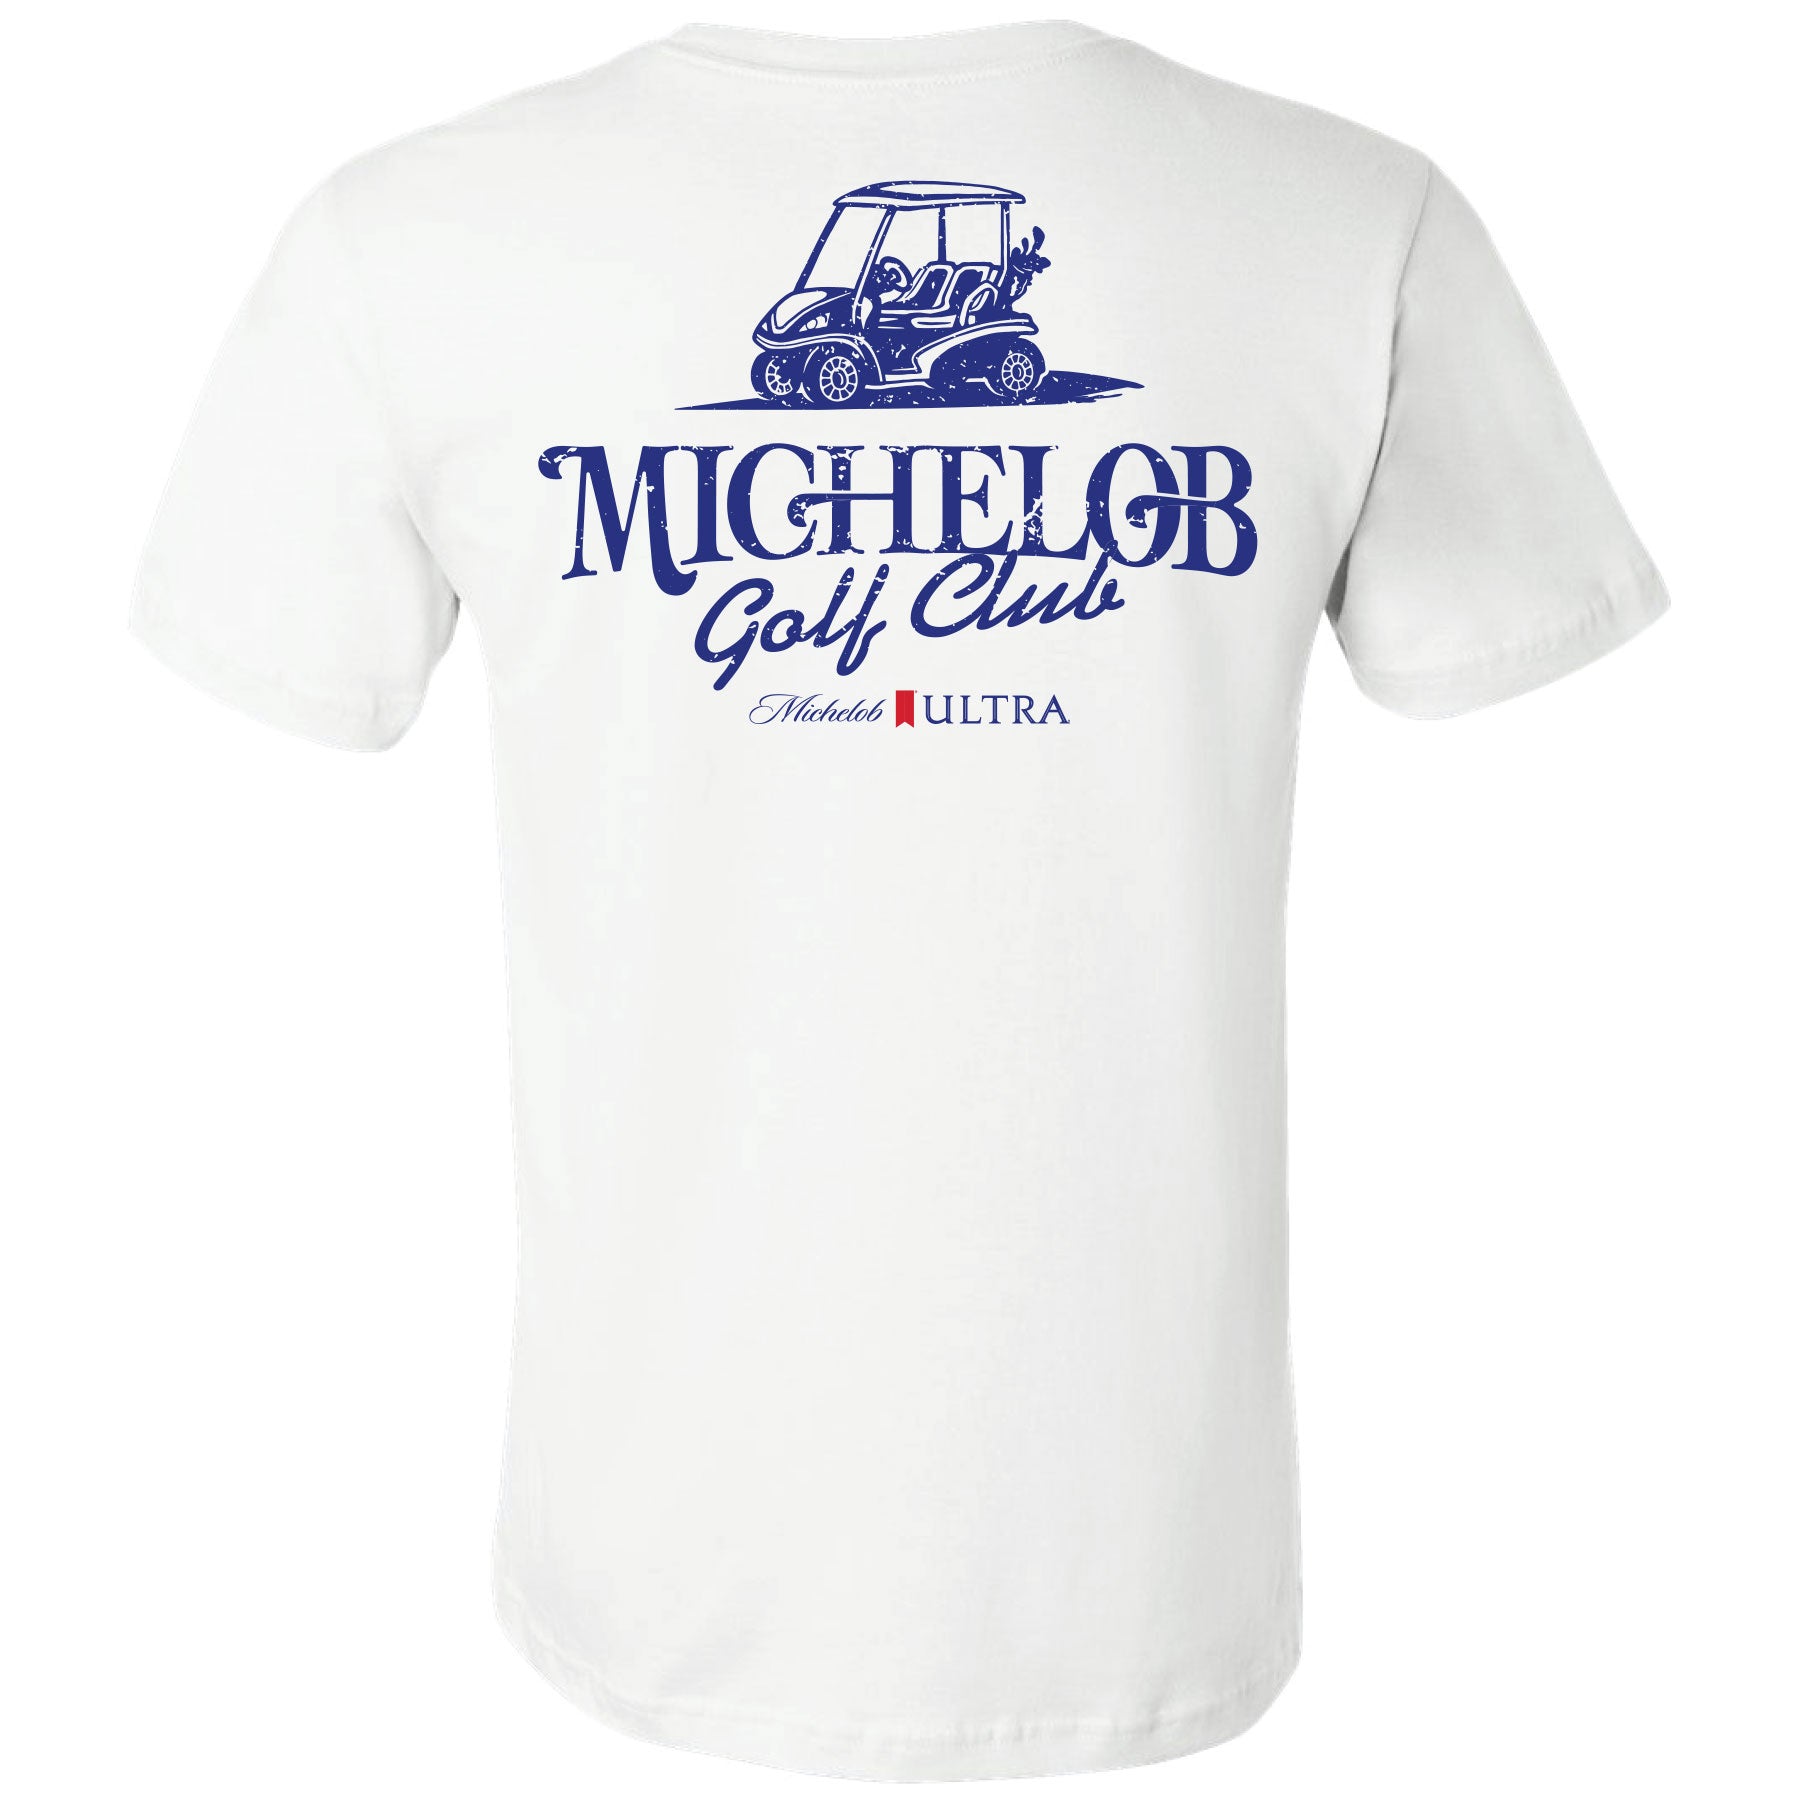 Michelob Ultra - Golf Cart/Golf Club Shirt - 2-Sided - Brew City